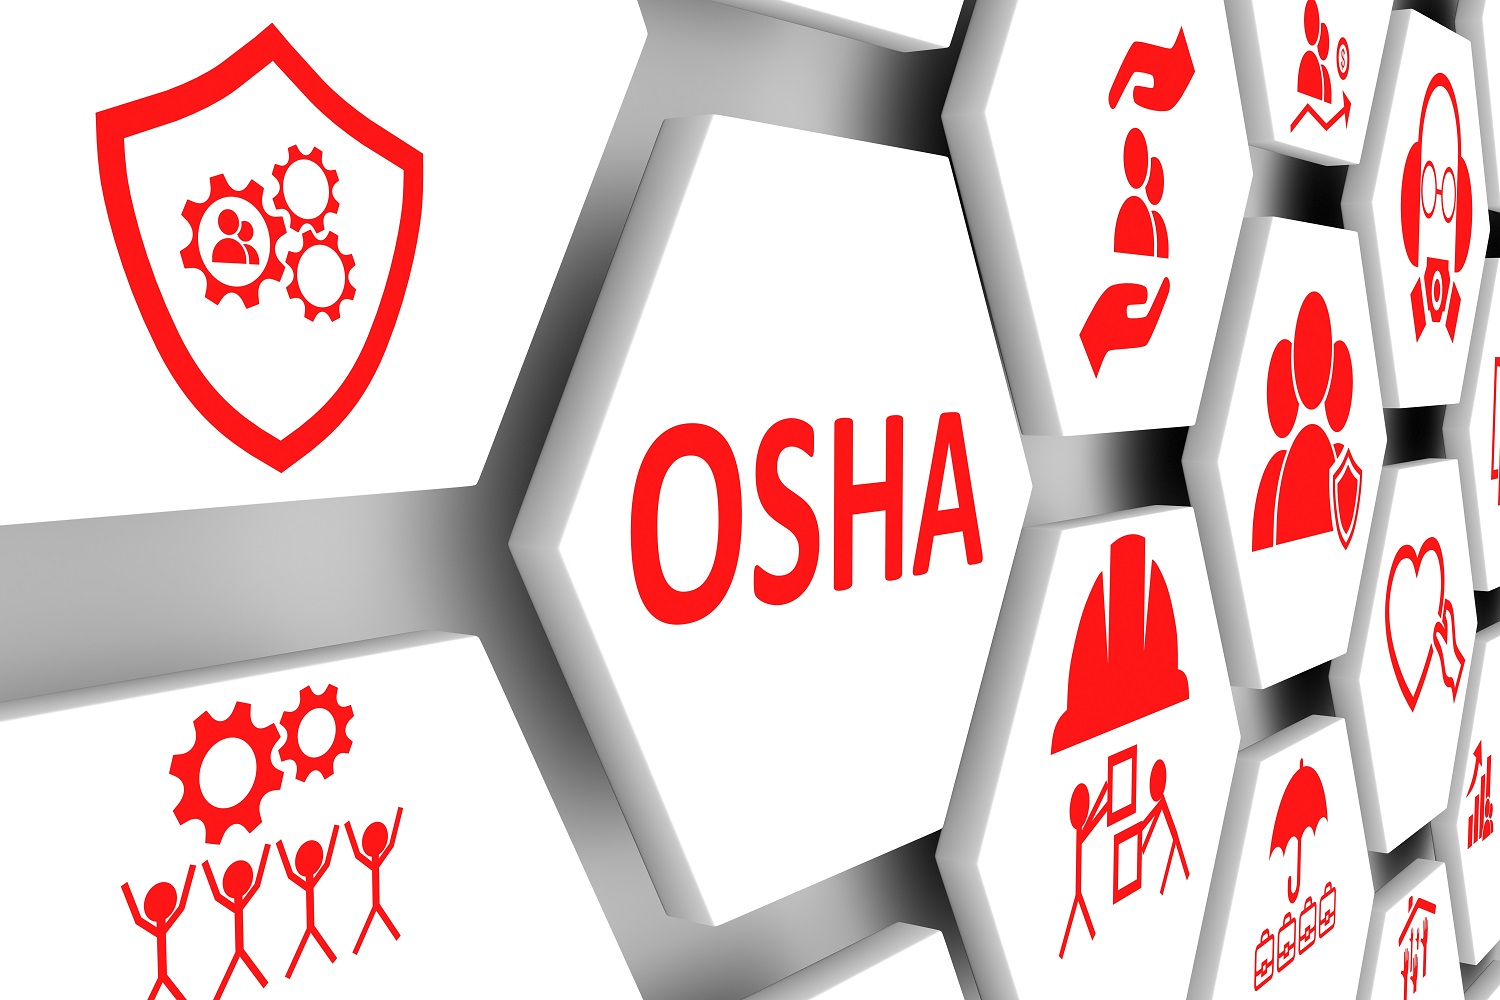 Top 10 OSHA Violations of 2022